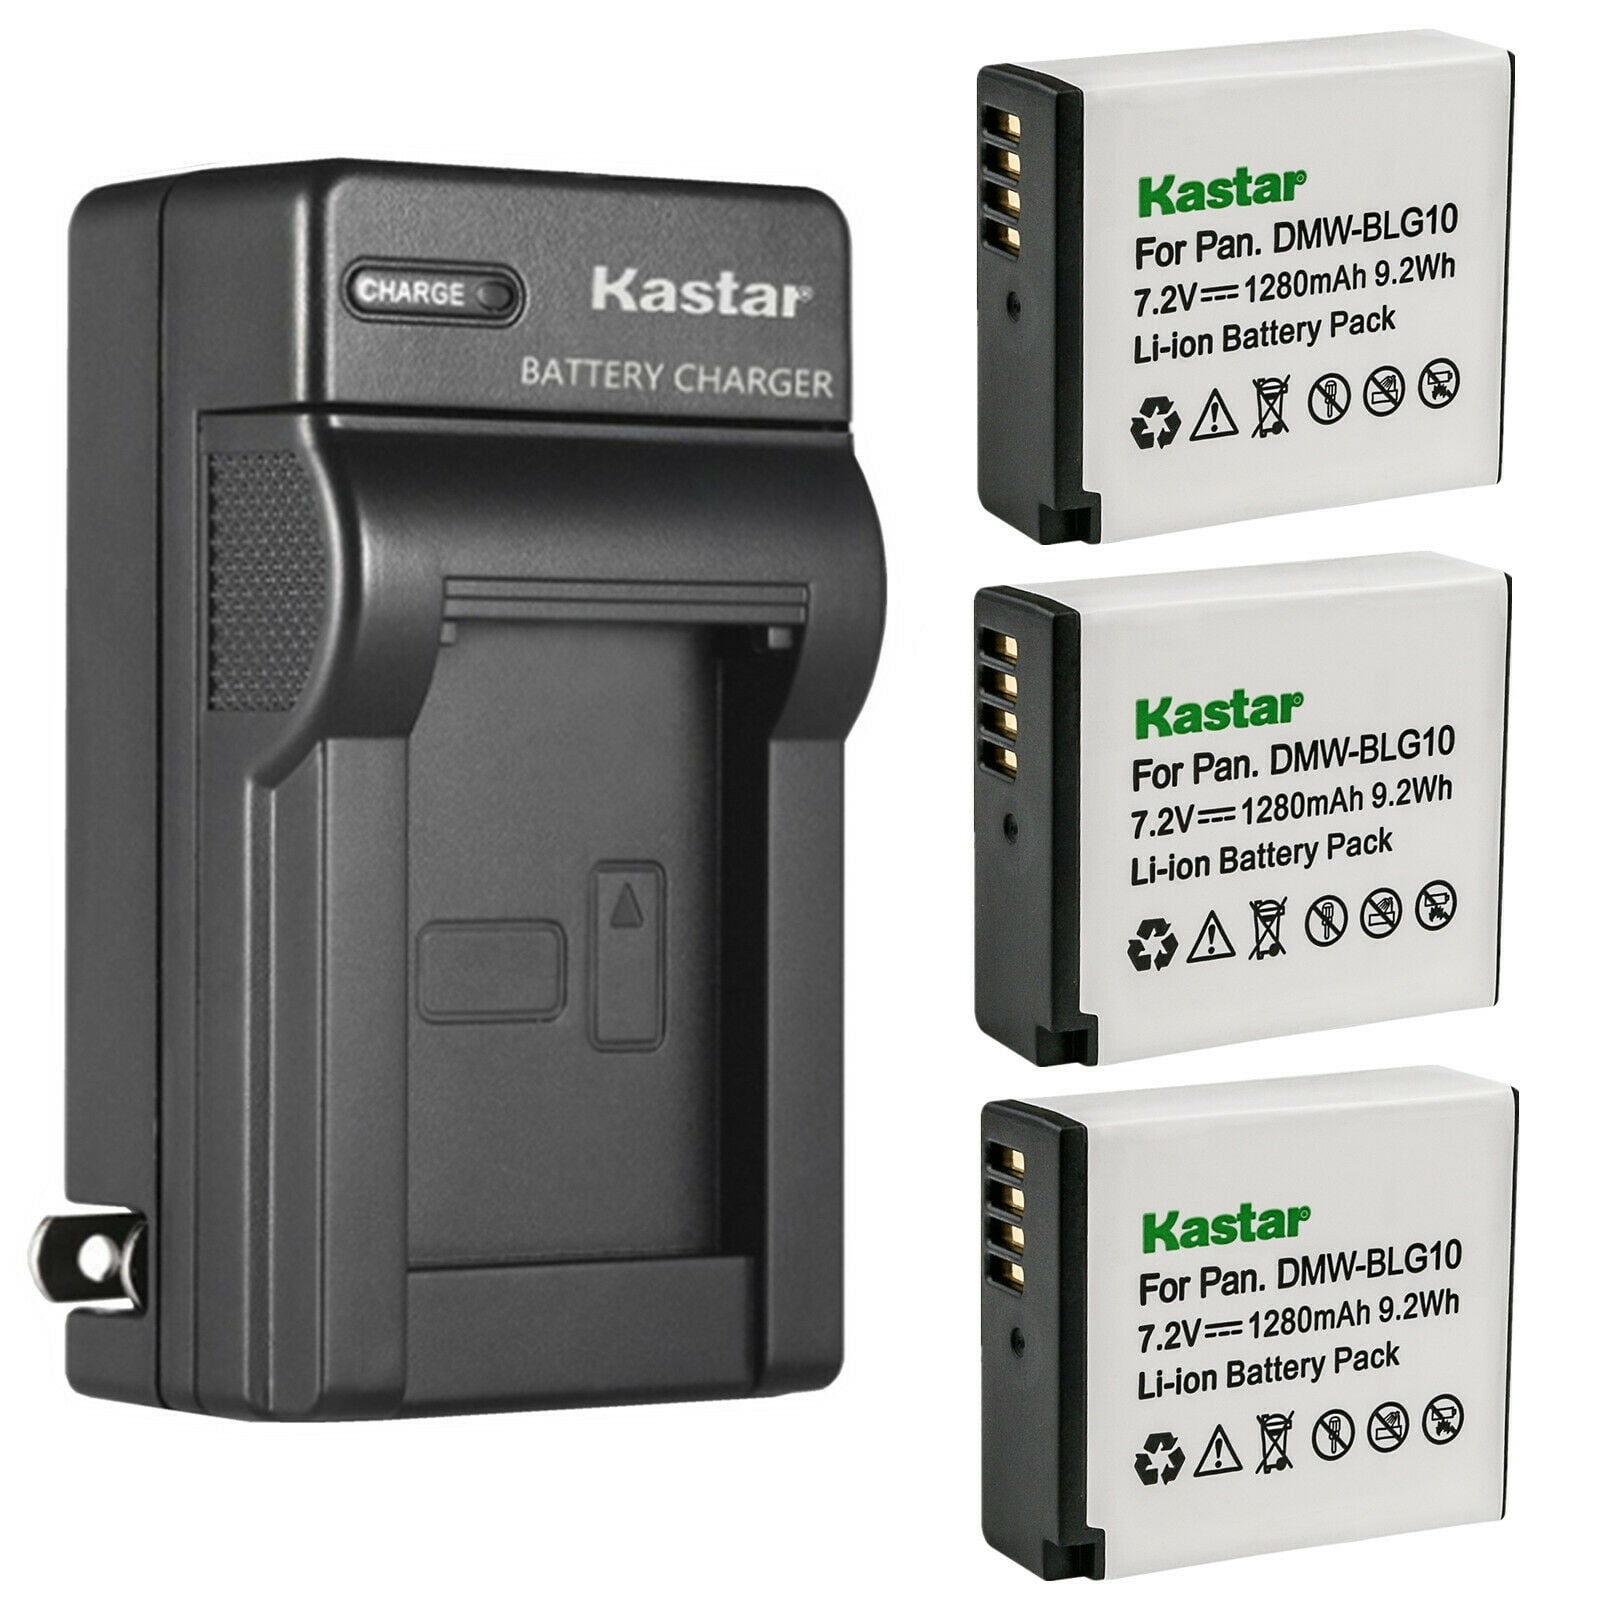 Kastar 3-Pack DMW-BLG10 Battery and AC Wall Charger Replacement for Panasonic Lumix DMC-TX1, Lumix DMC-TZ100, Lumix DMC-TZ101, Lumix DMC-TZ80, Lumix DMC-TZ81, Lumix DMC-TZ85, Lumix Camera - Walmart.com